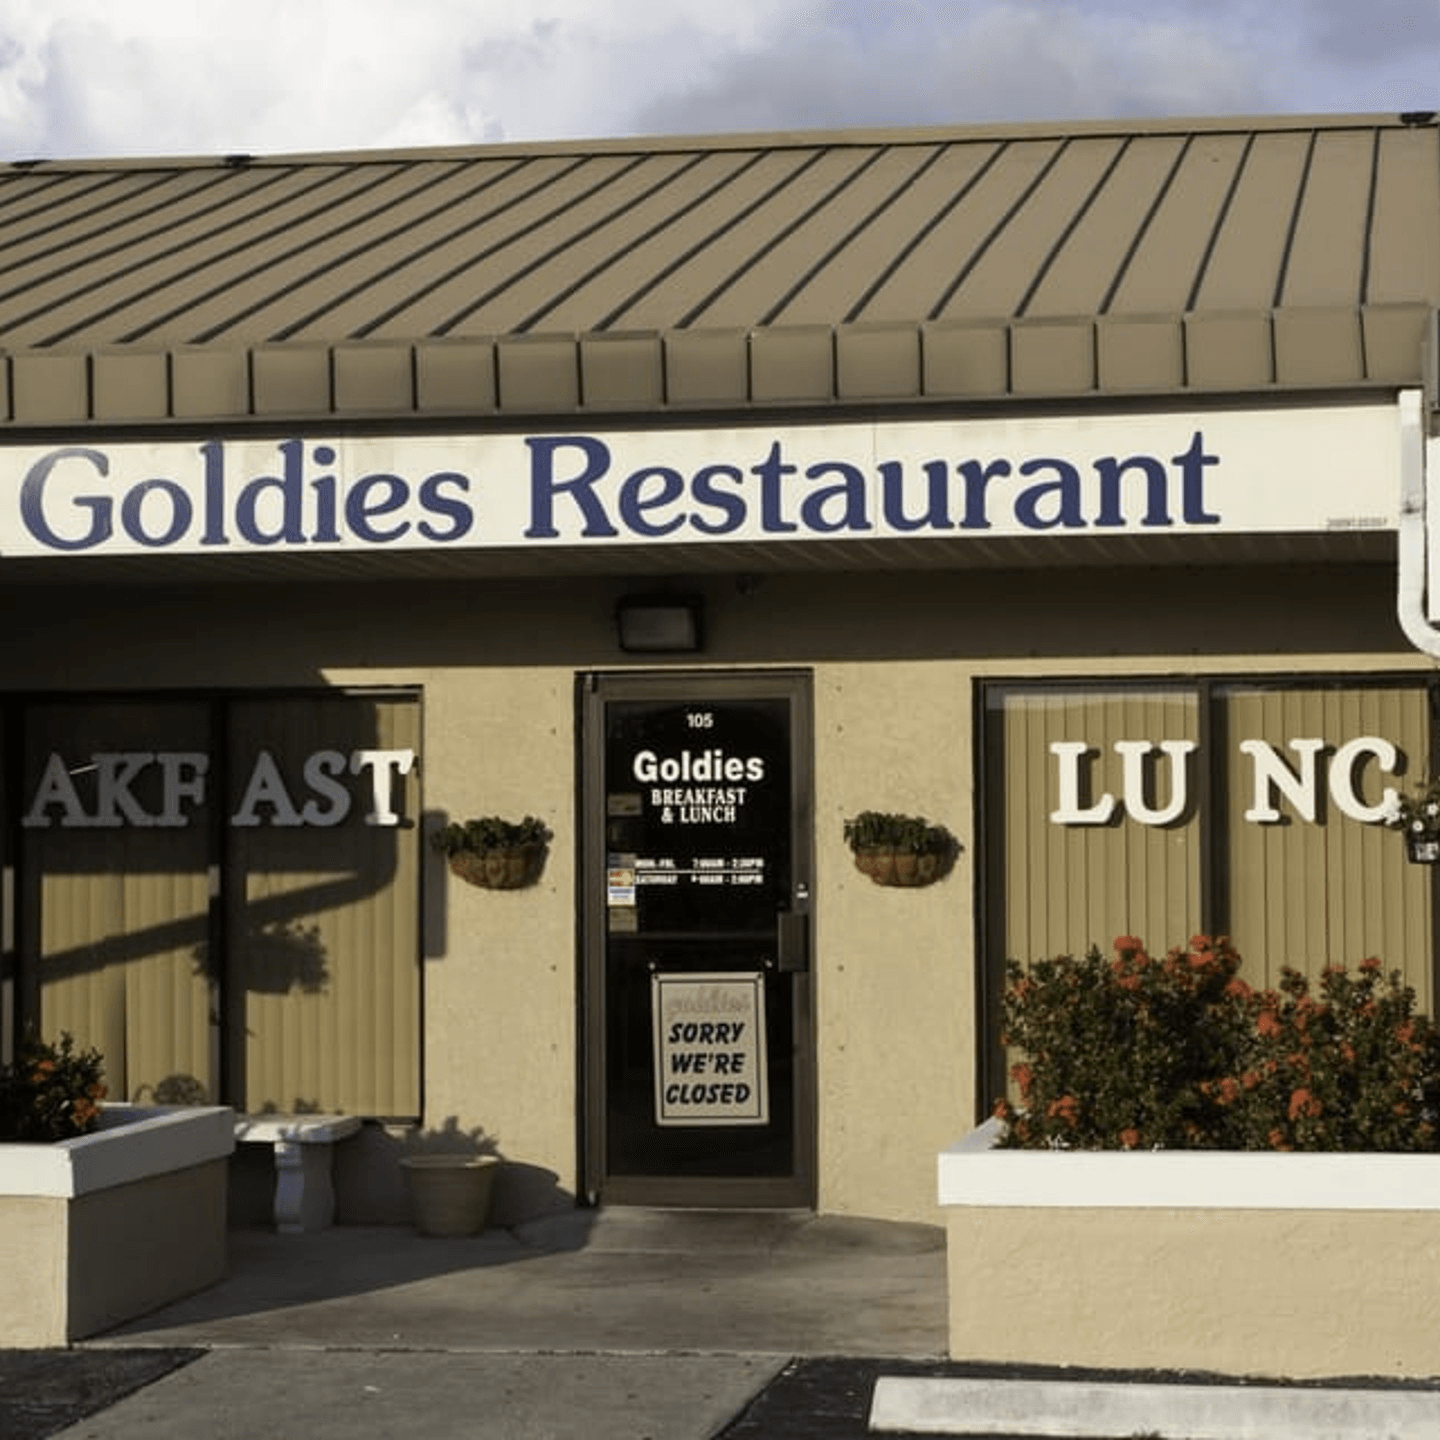 Goldies Restaurant: Where Flavor Meets Home